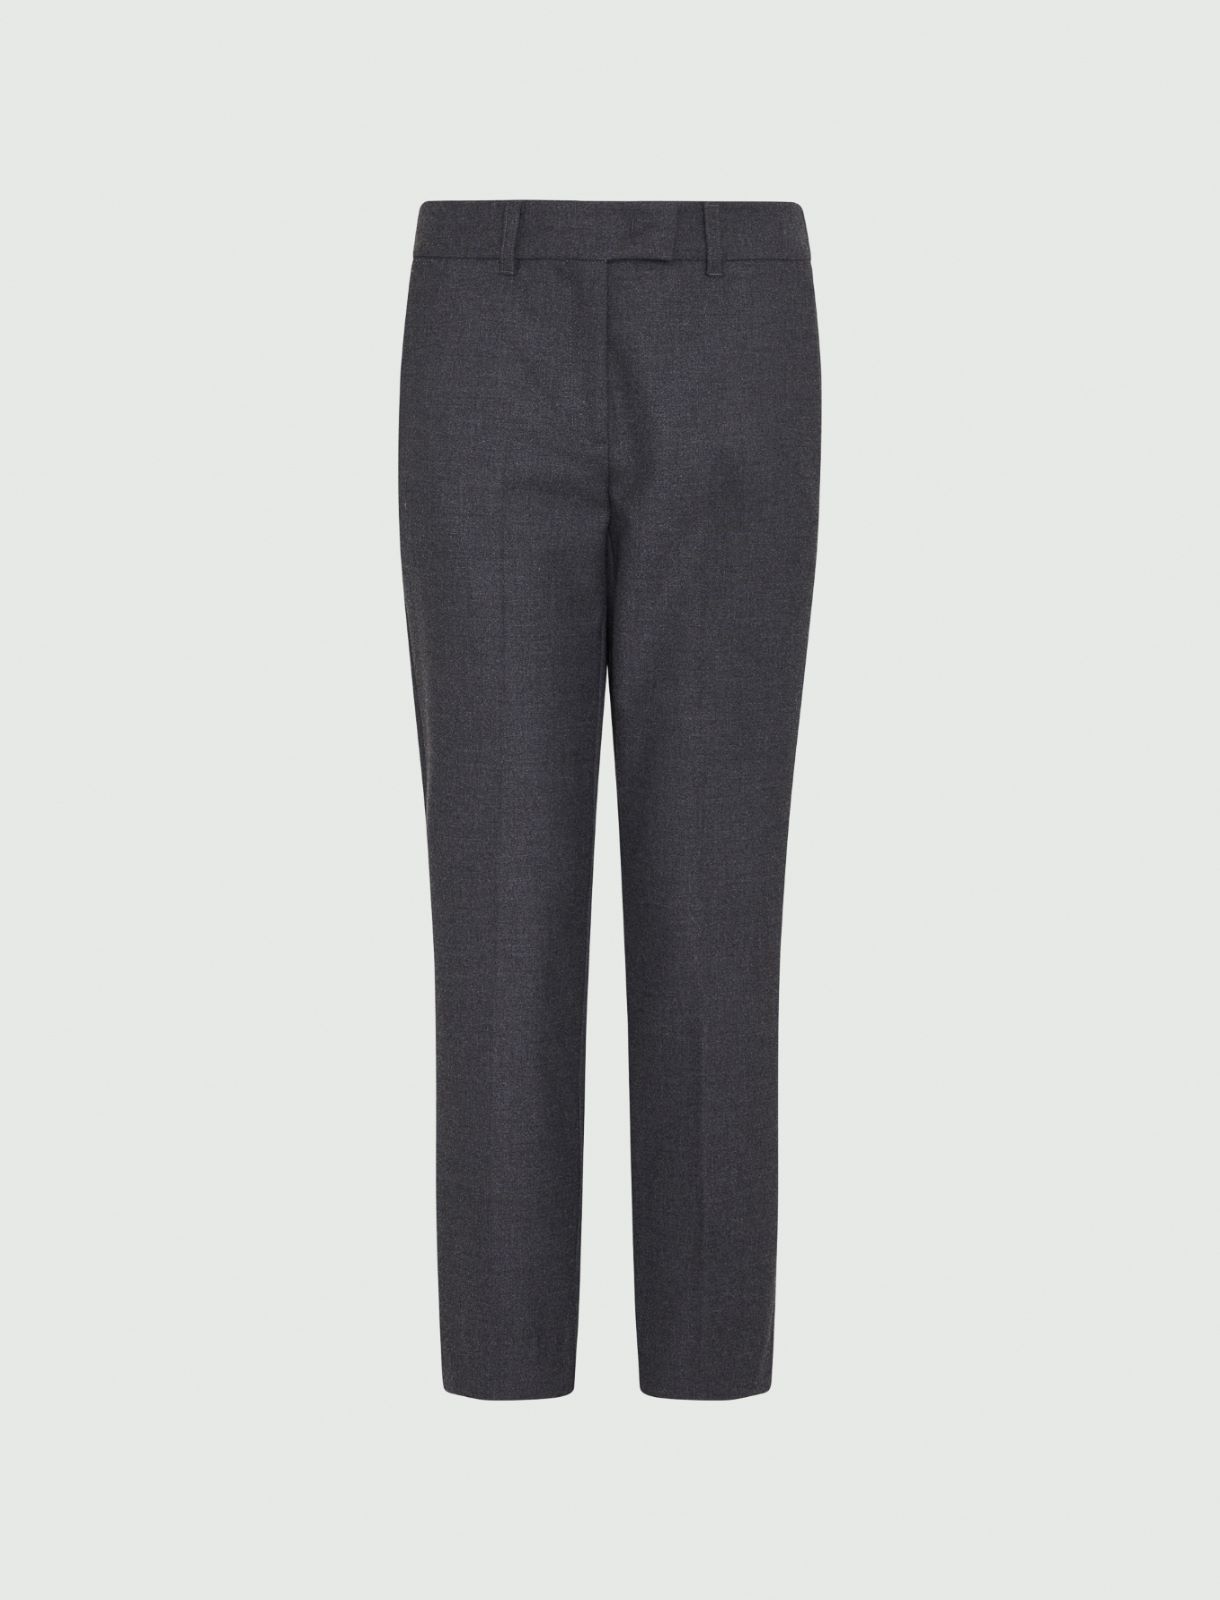 Flannel trousers - Melange grey - Marella - 5